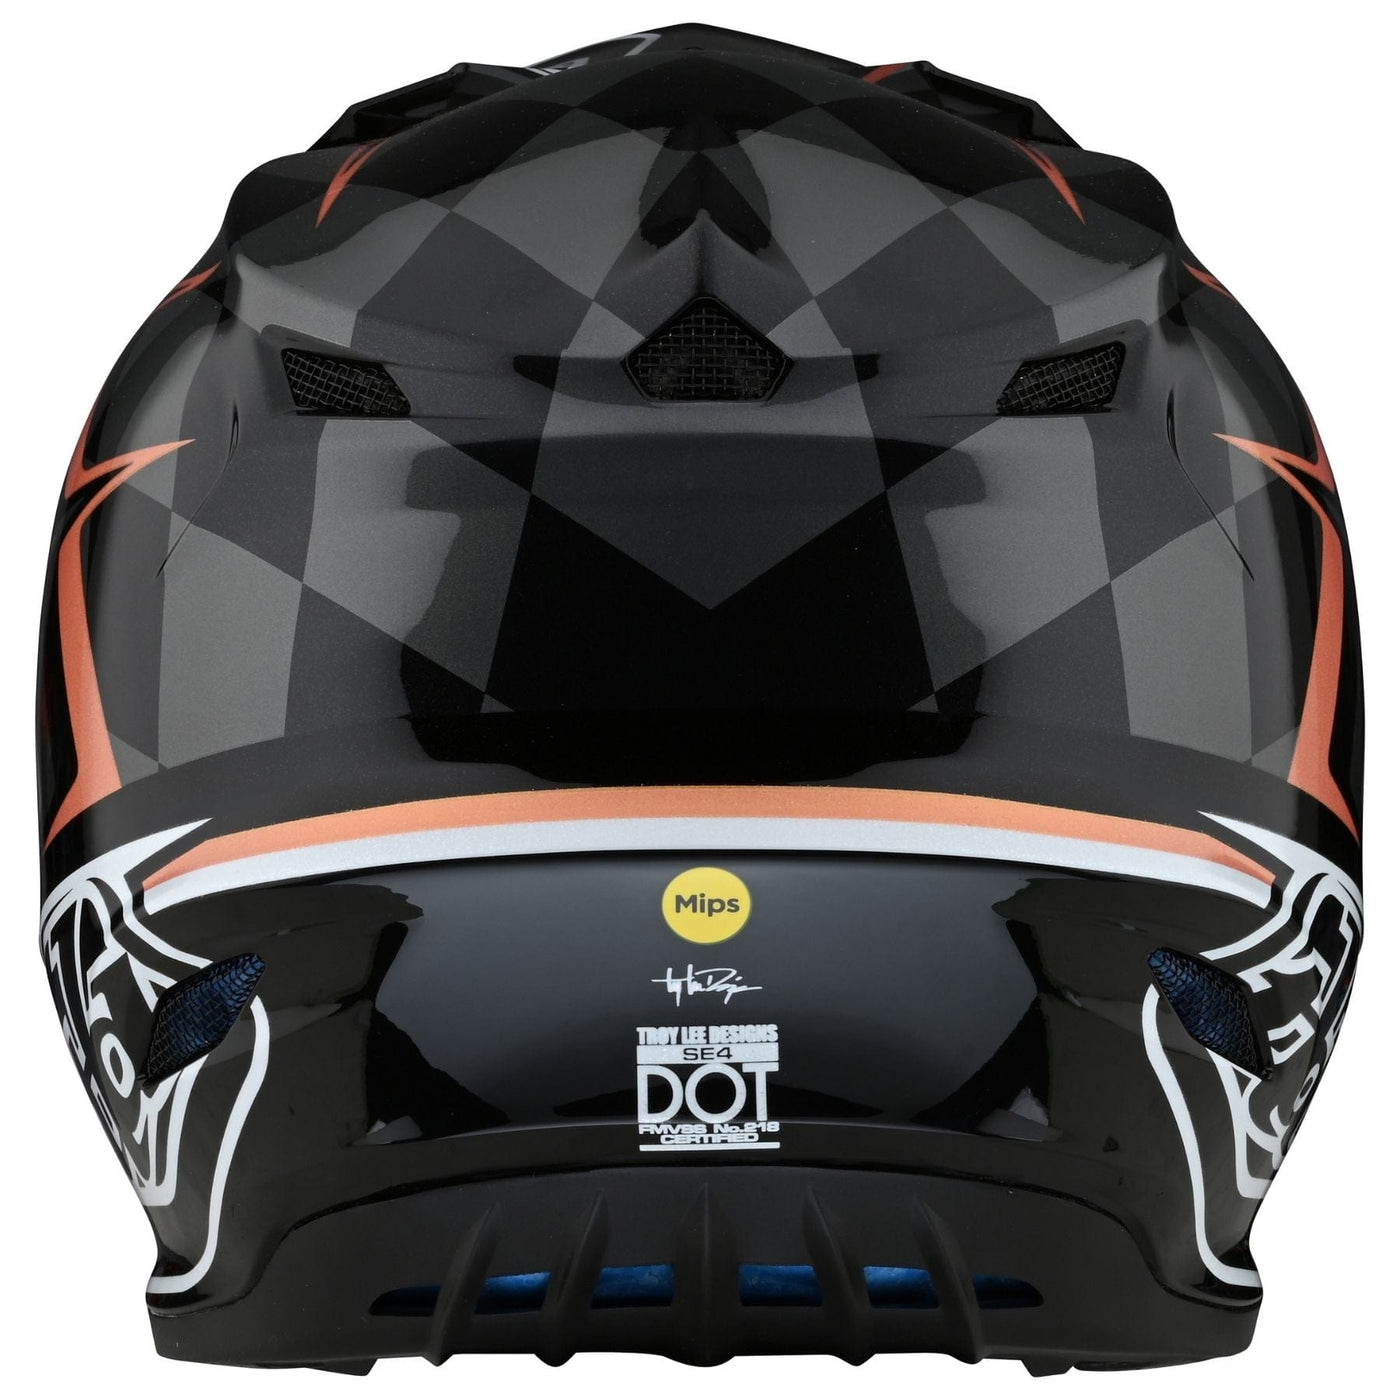 Troy Lee SE4 Polyacrylite Helmet Warped - Black/Copper 8Lines Shop - Fast Shipping